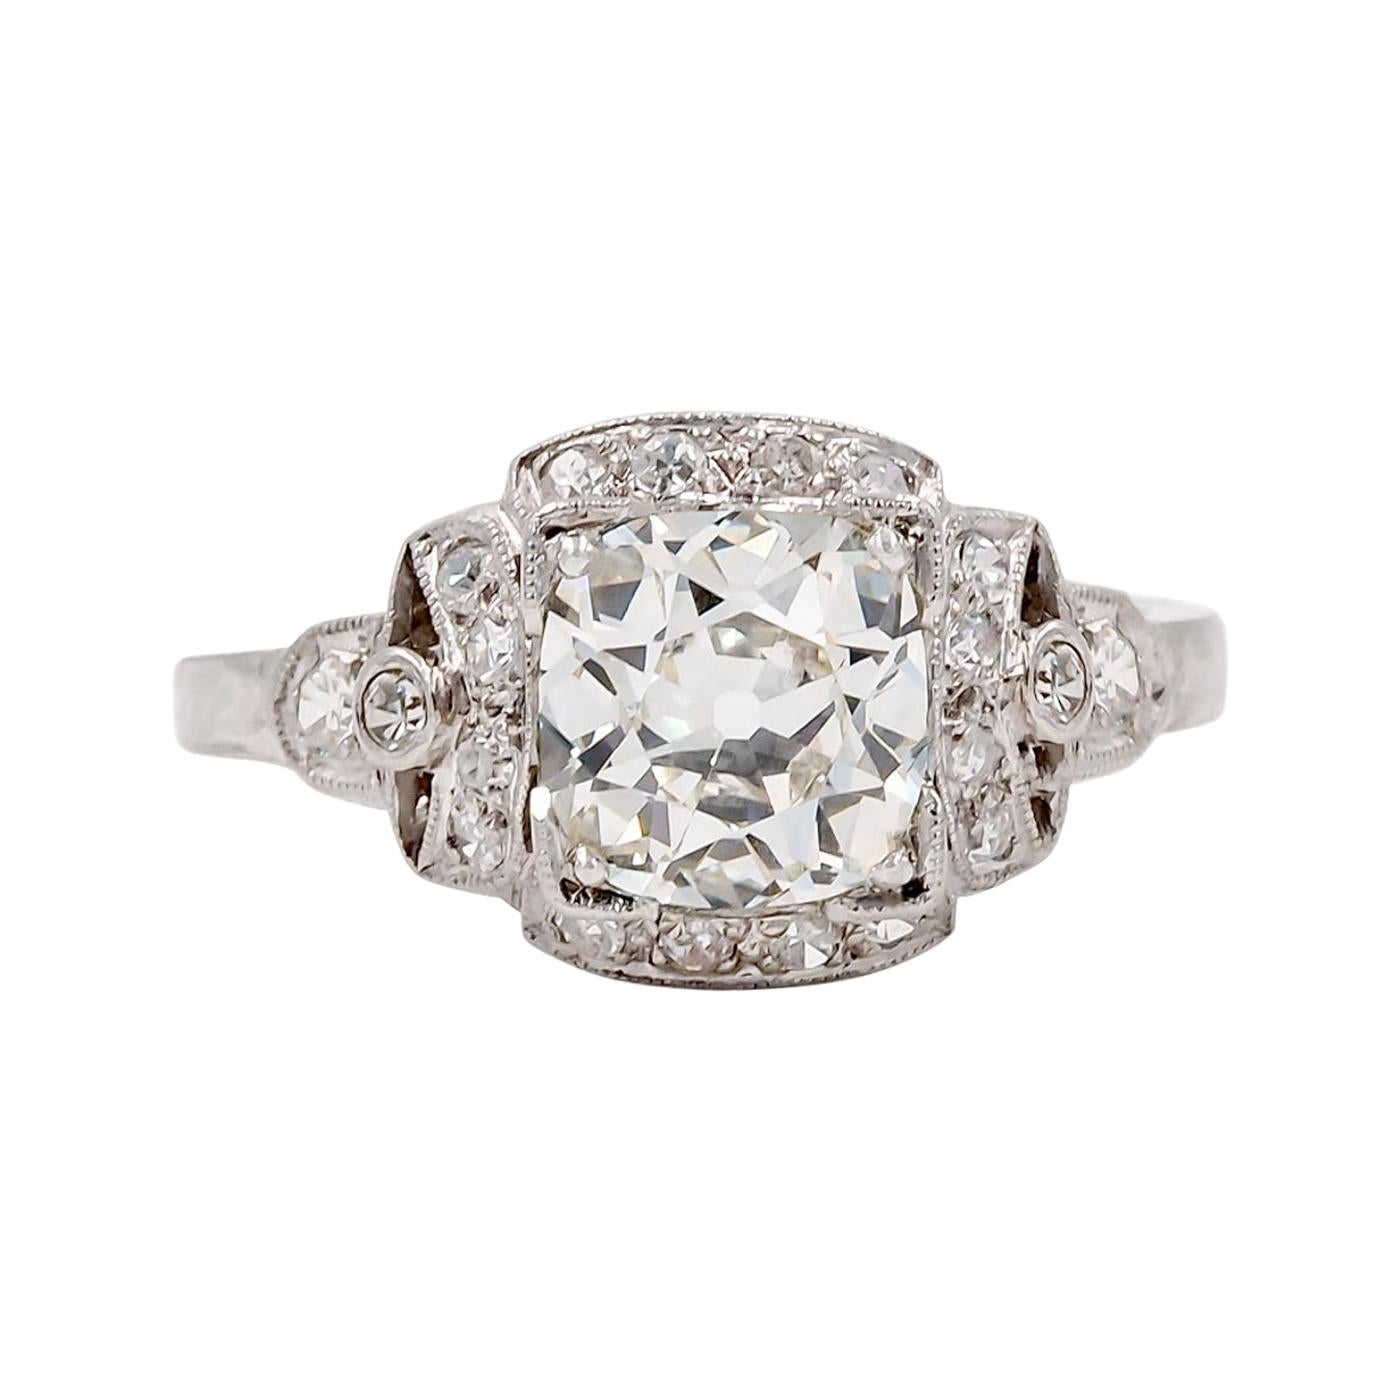 Art Deco Era 1.32 Carat Old European Cut Diamond Tiffany & Co. Engagement Ring